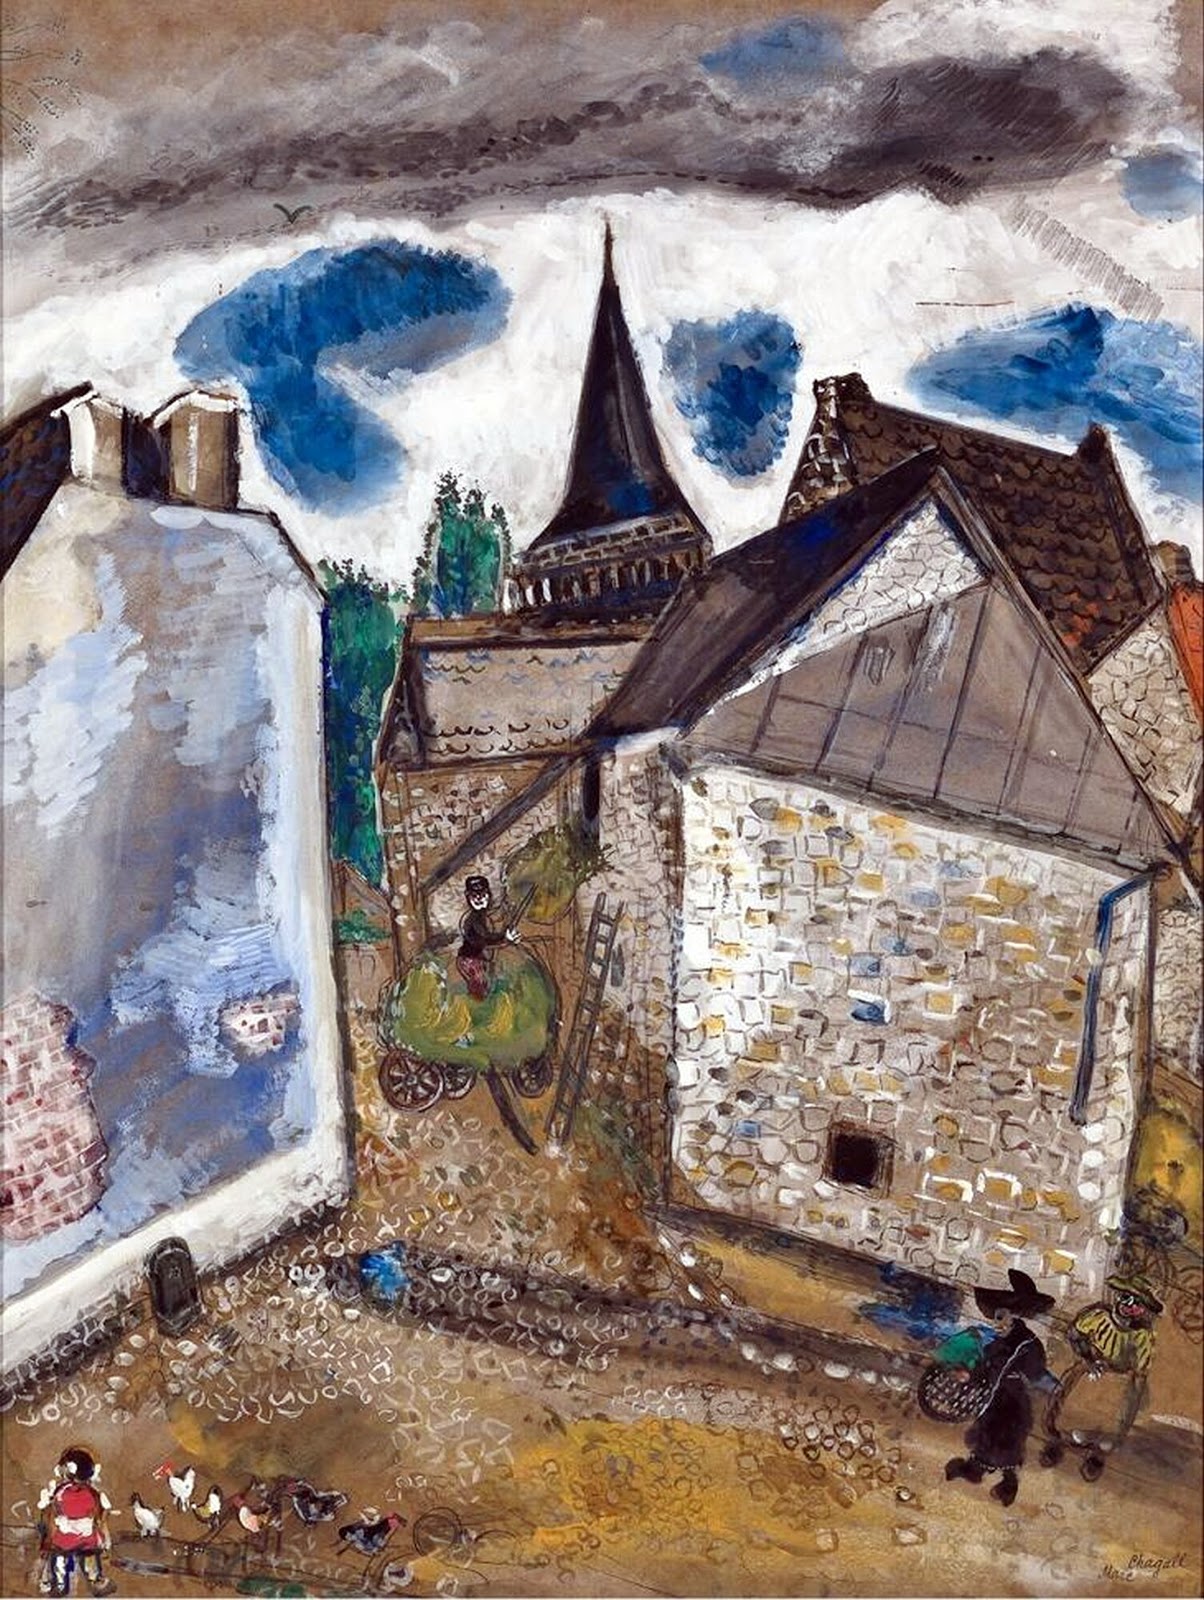 Marc+Chagall-1887-1985 (245).jpg